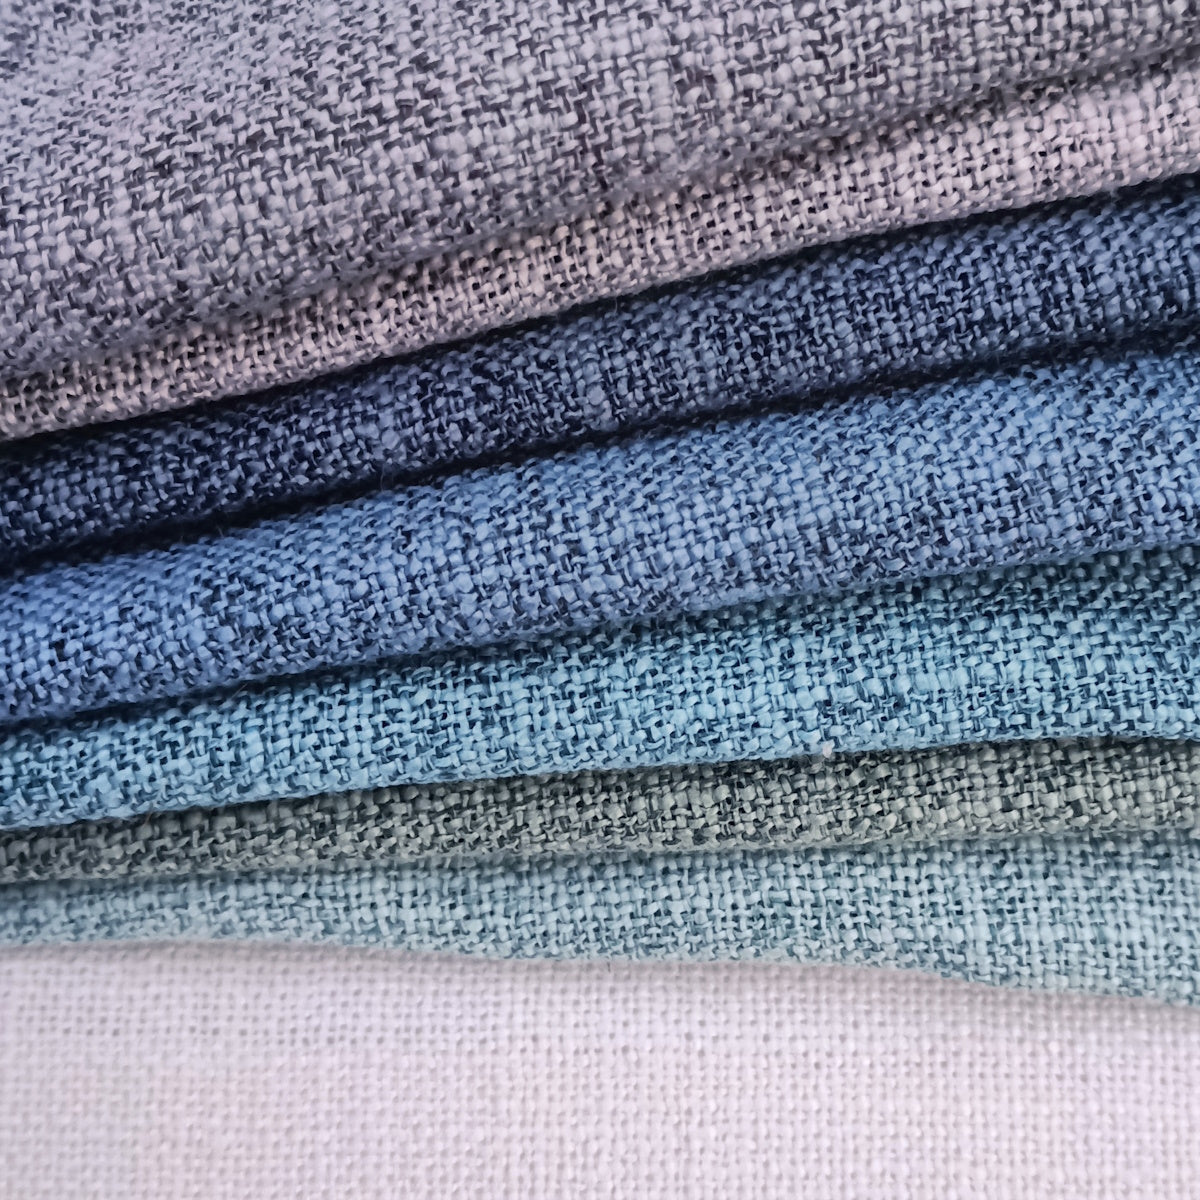 Home décor fabrics in blues ad grey